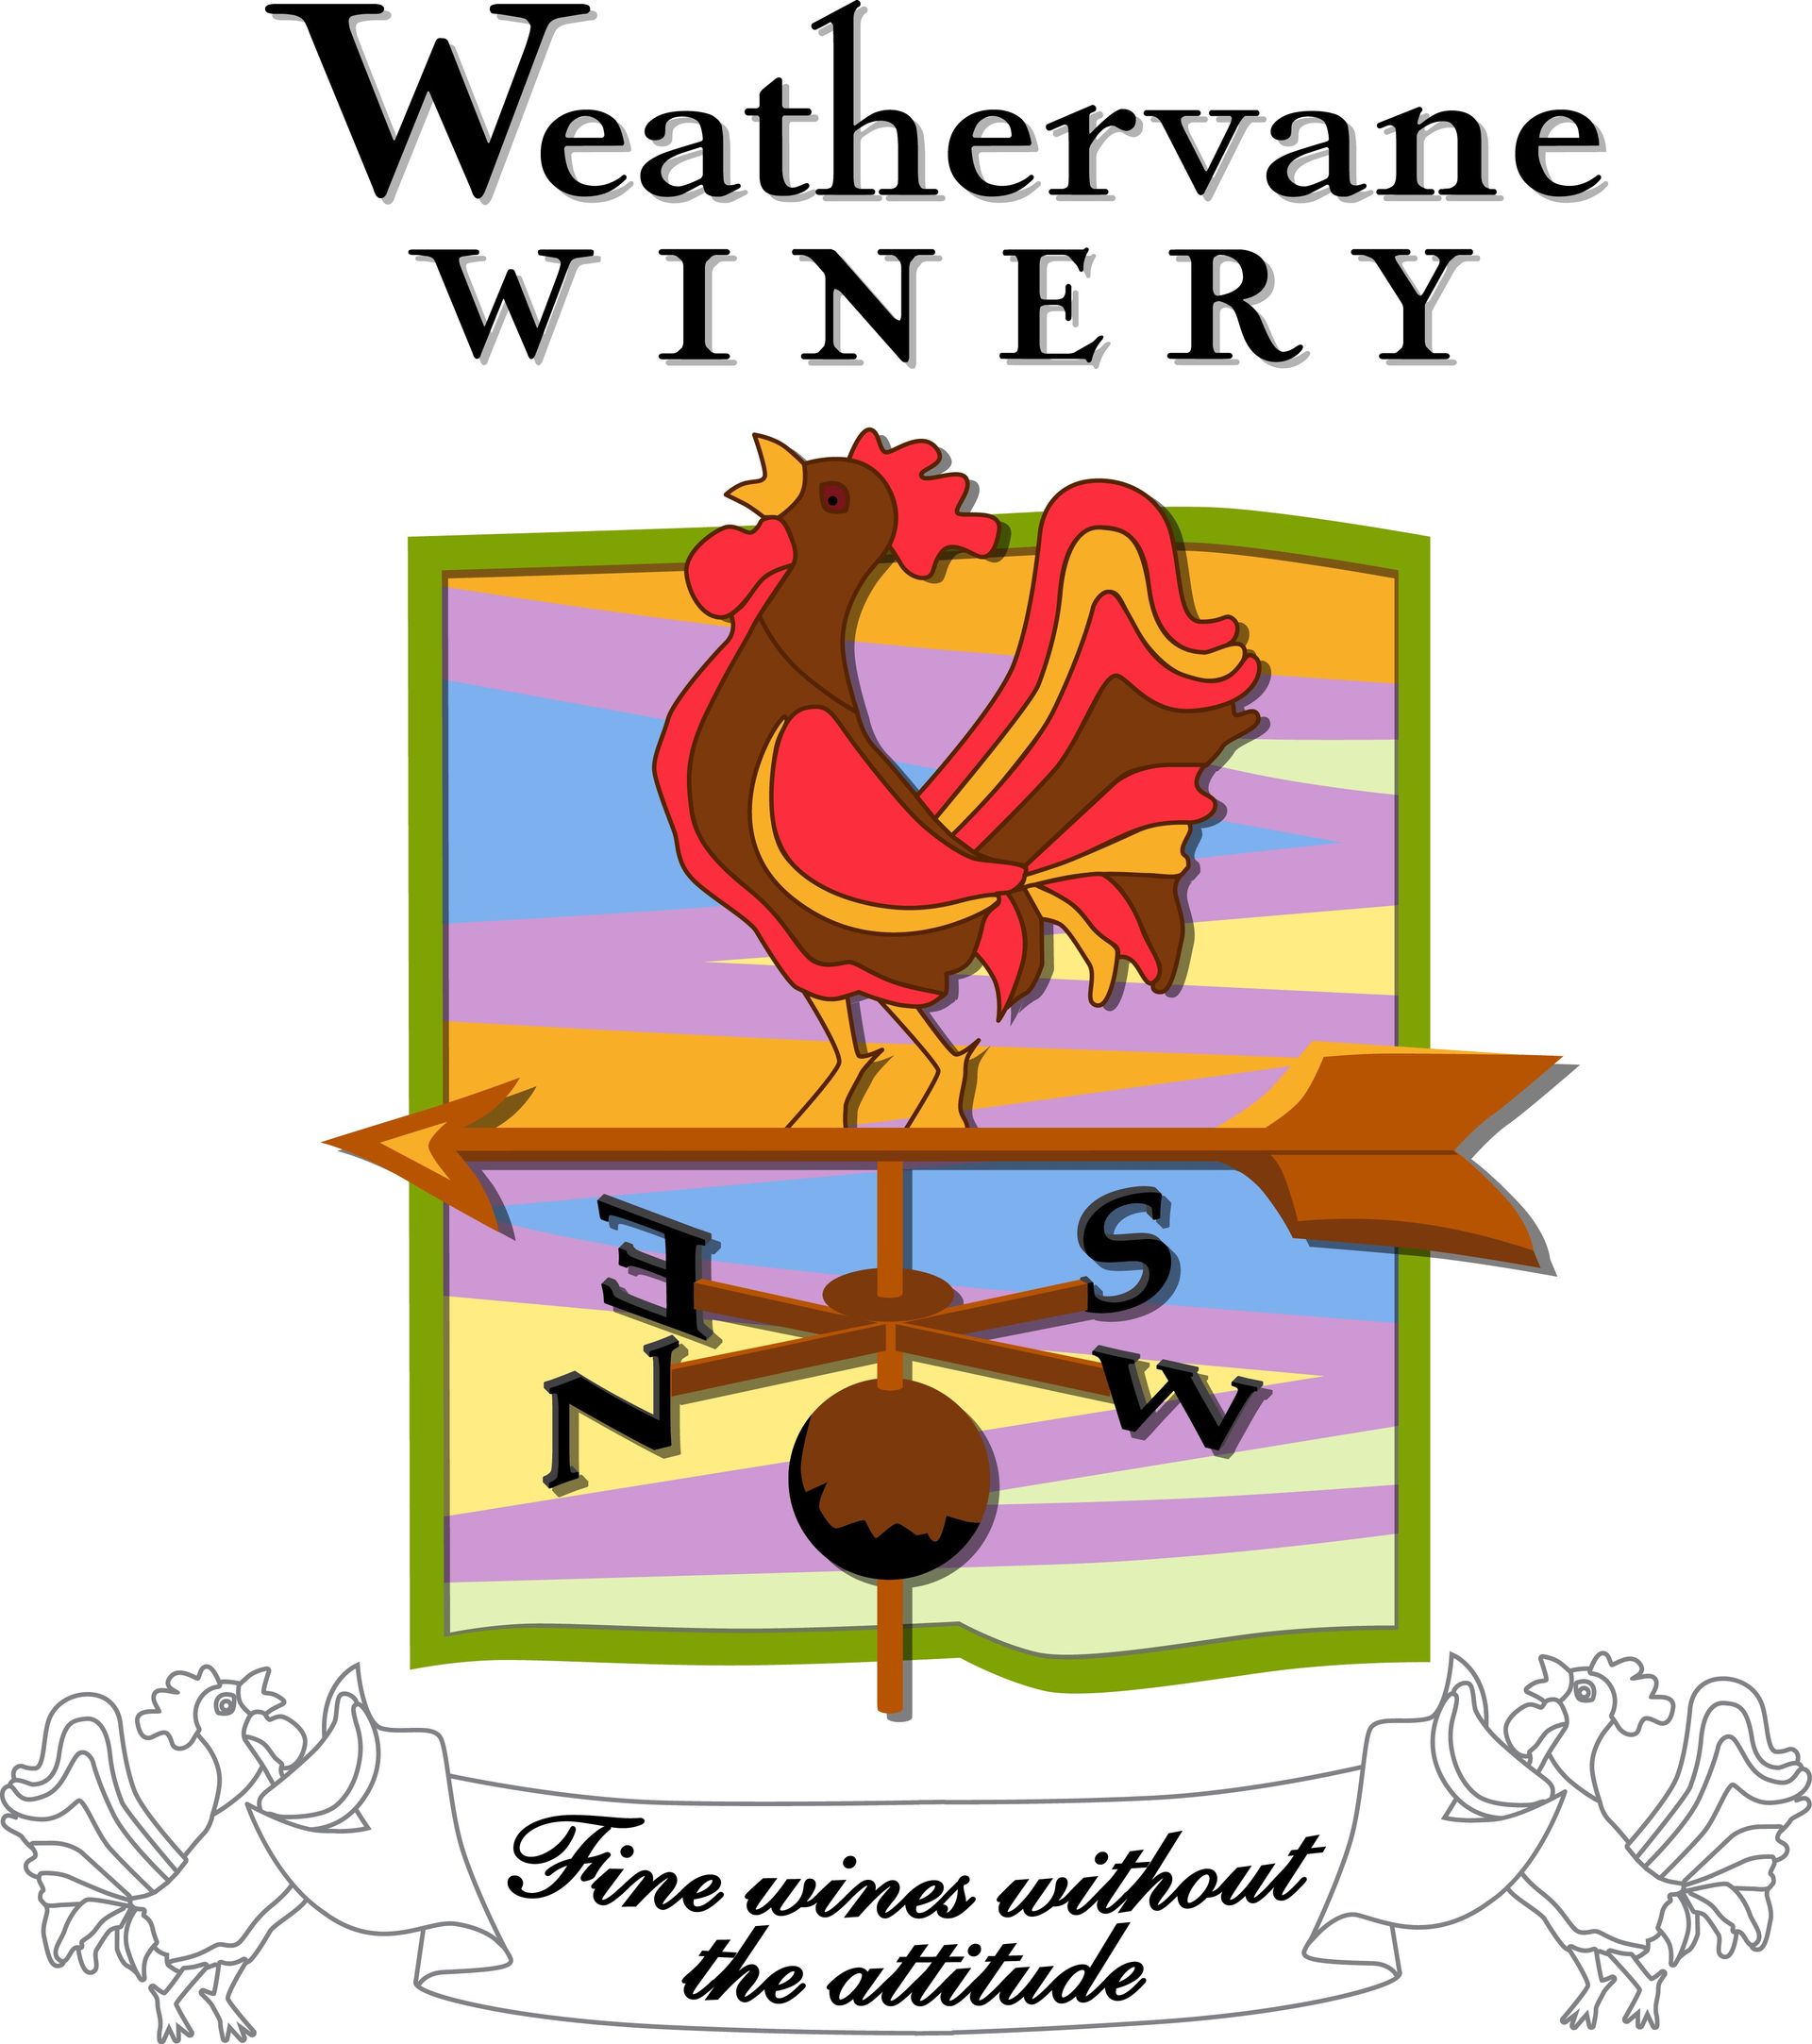 Weathervane Winery logo